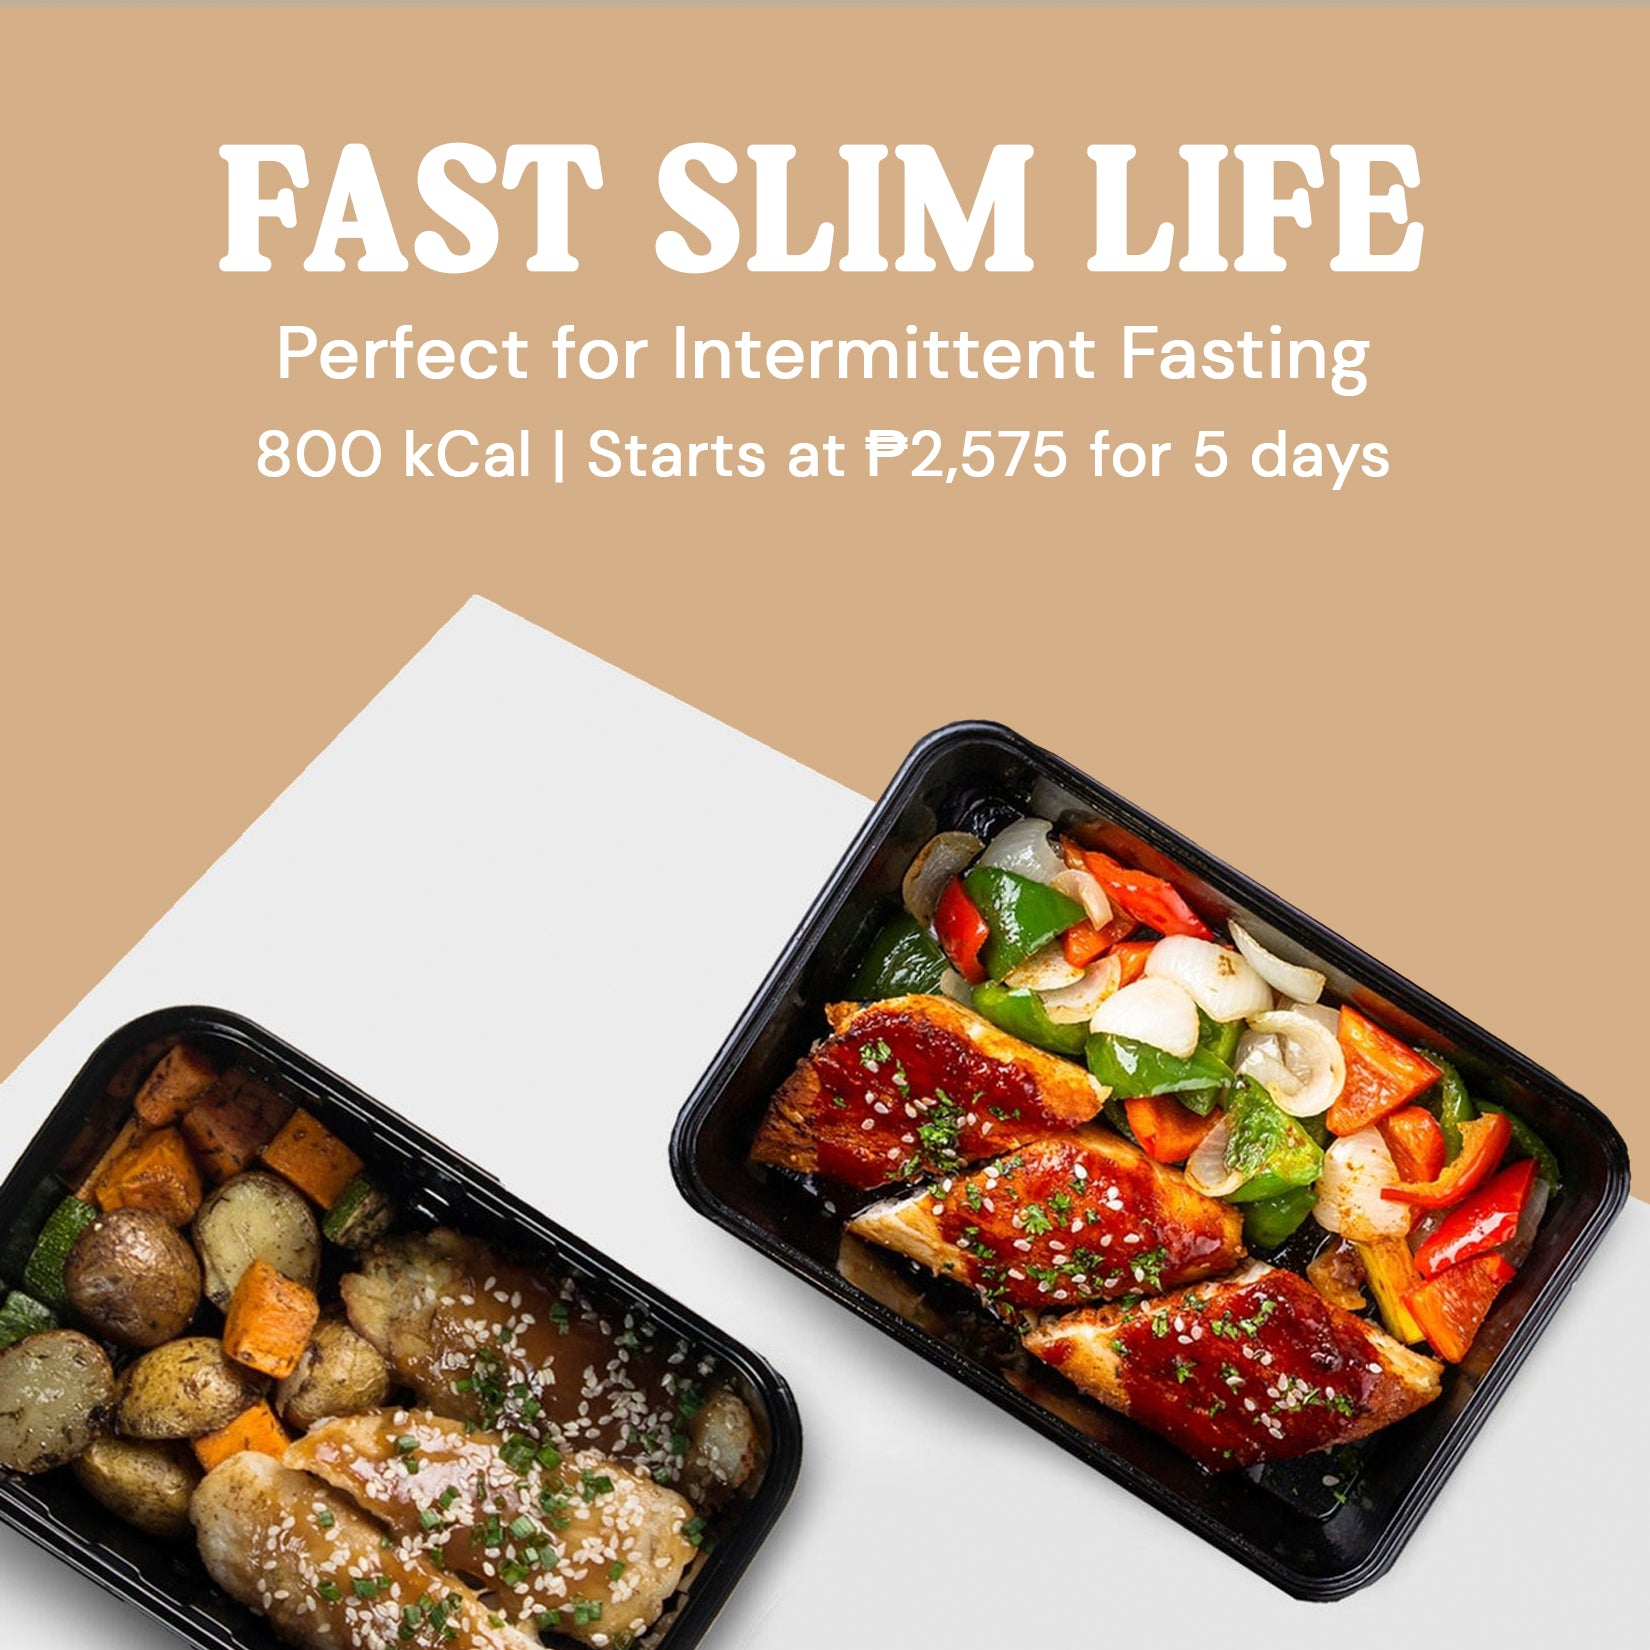 Fast Slim Life Meal Plan